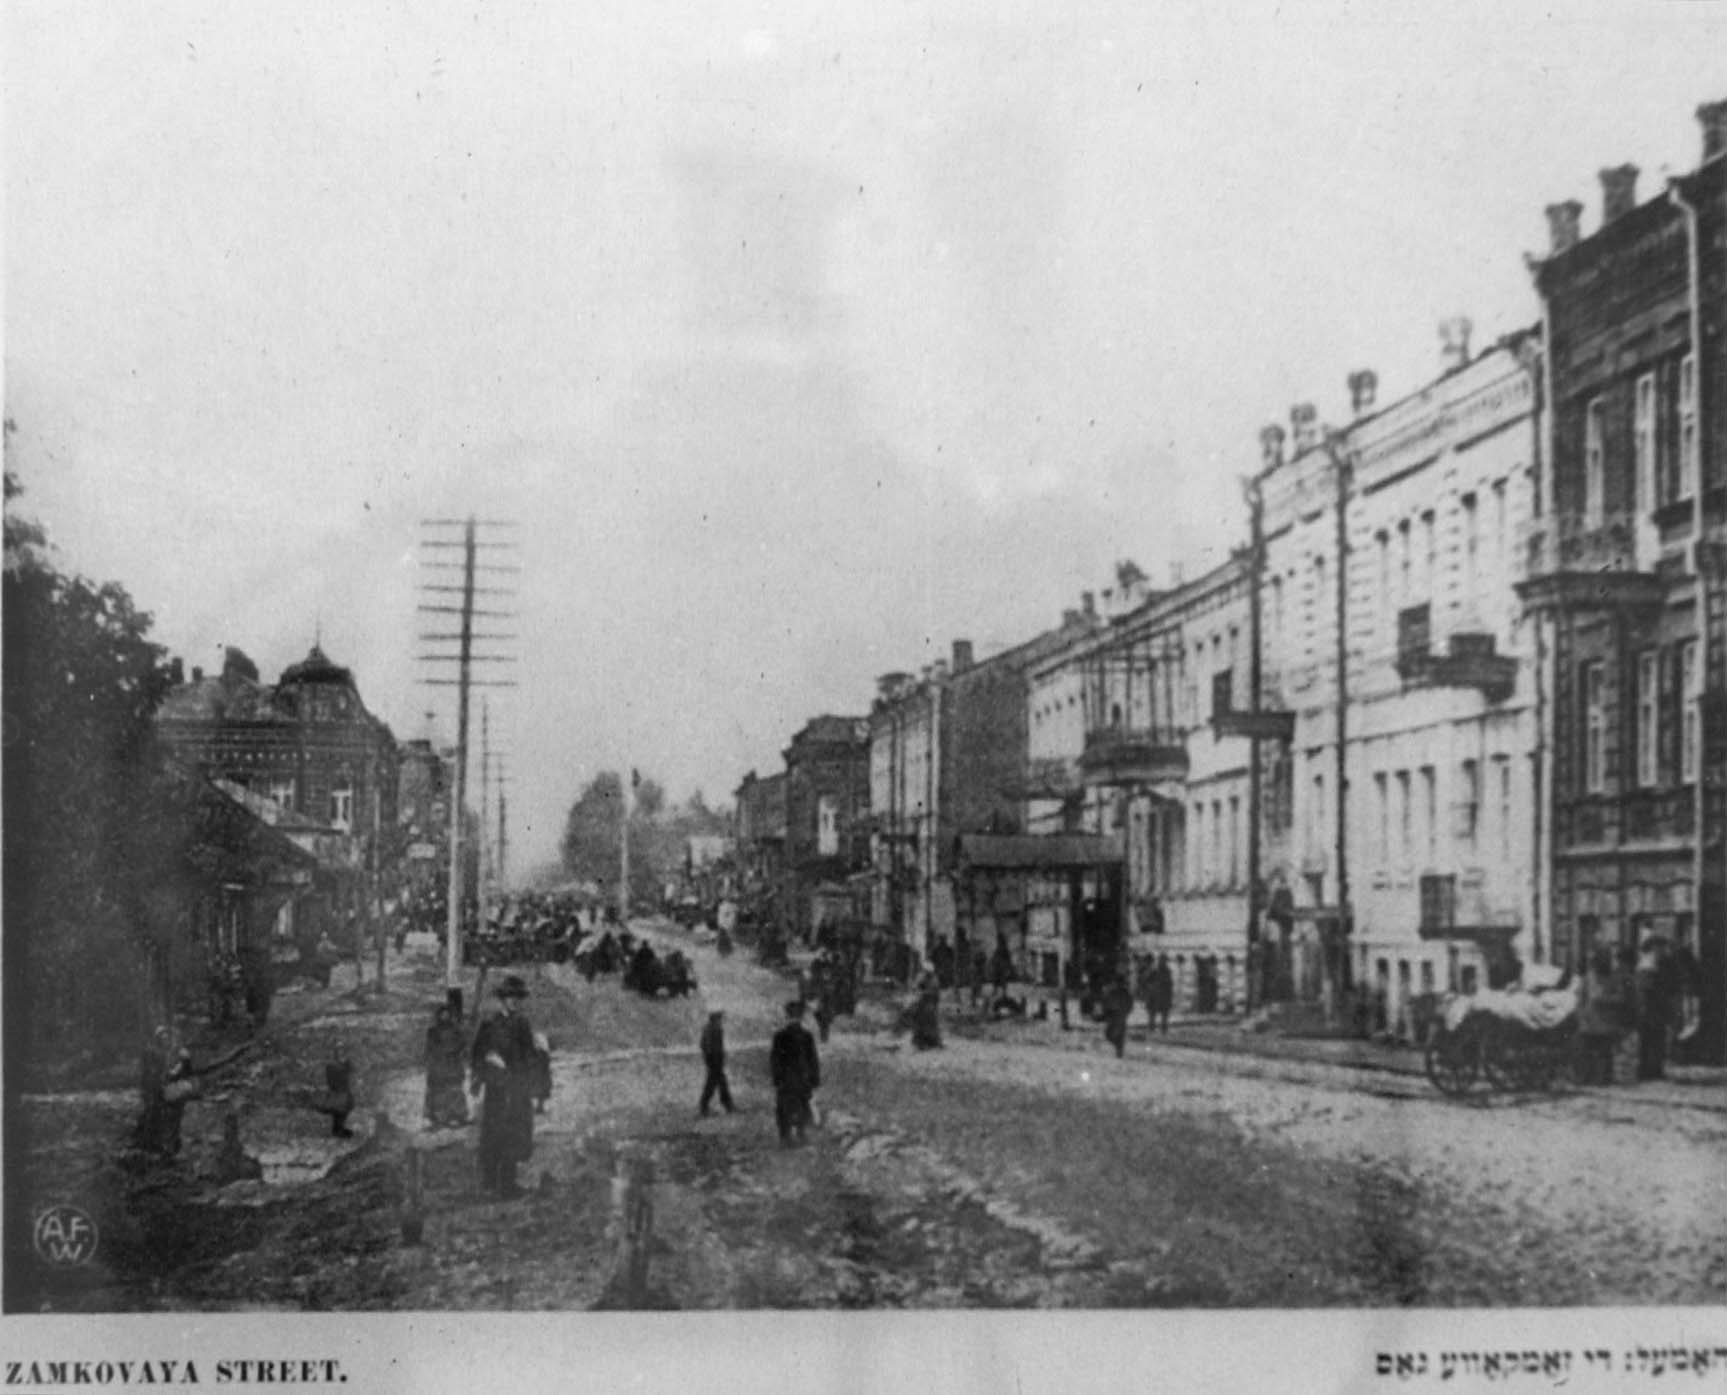 Zamkovaya Street (now Lenin Boulevard) in Gomel, the early 20th century